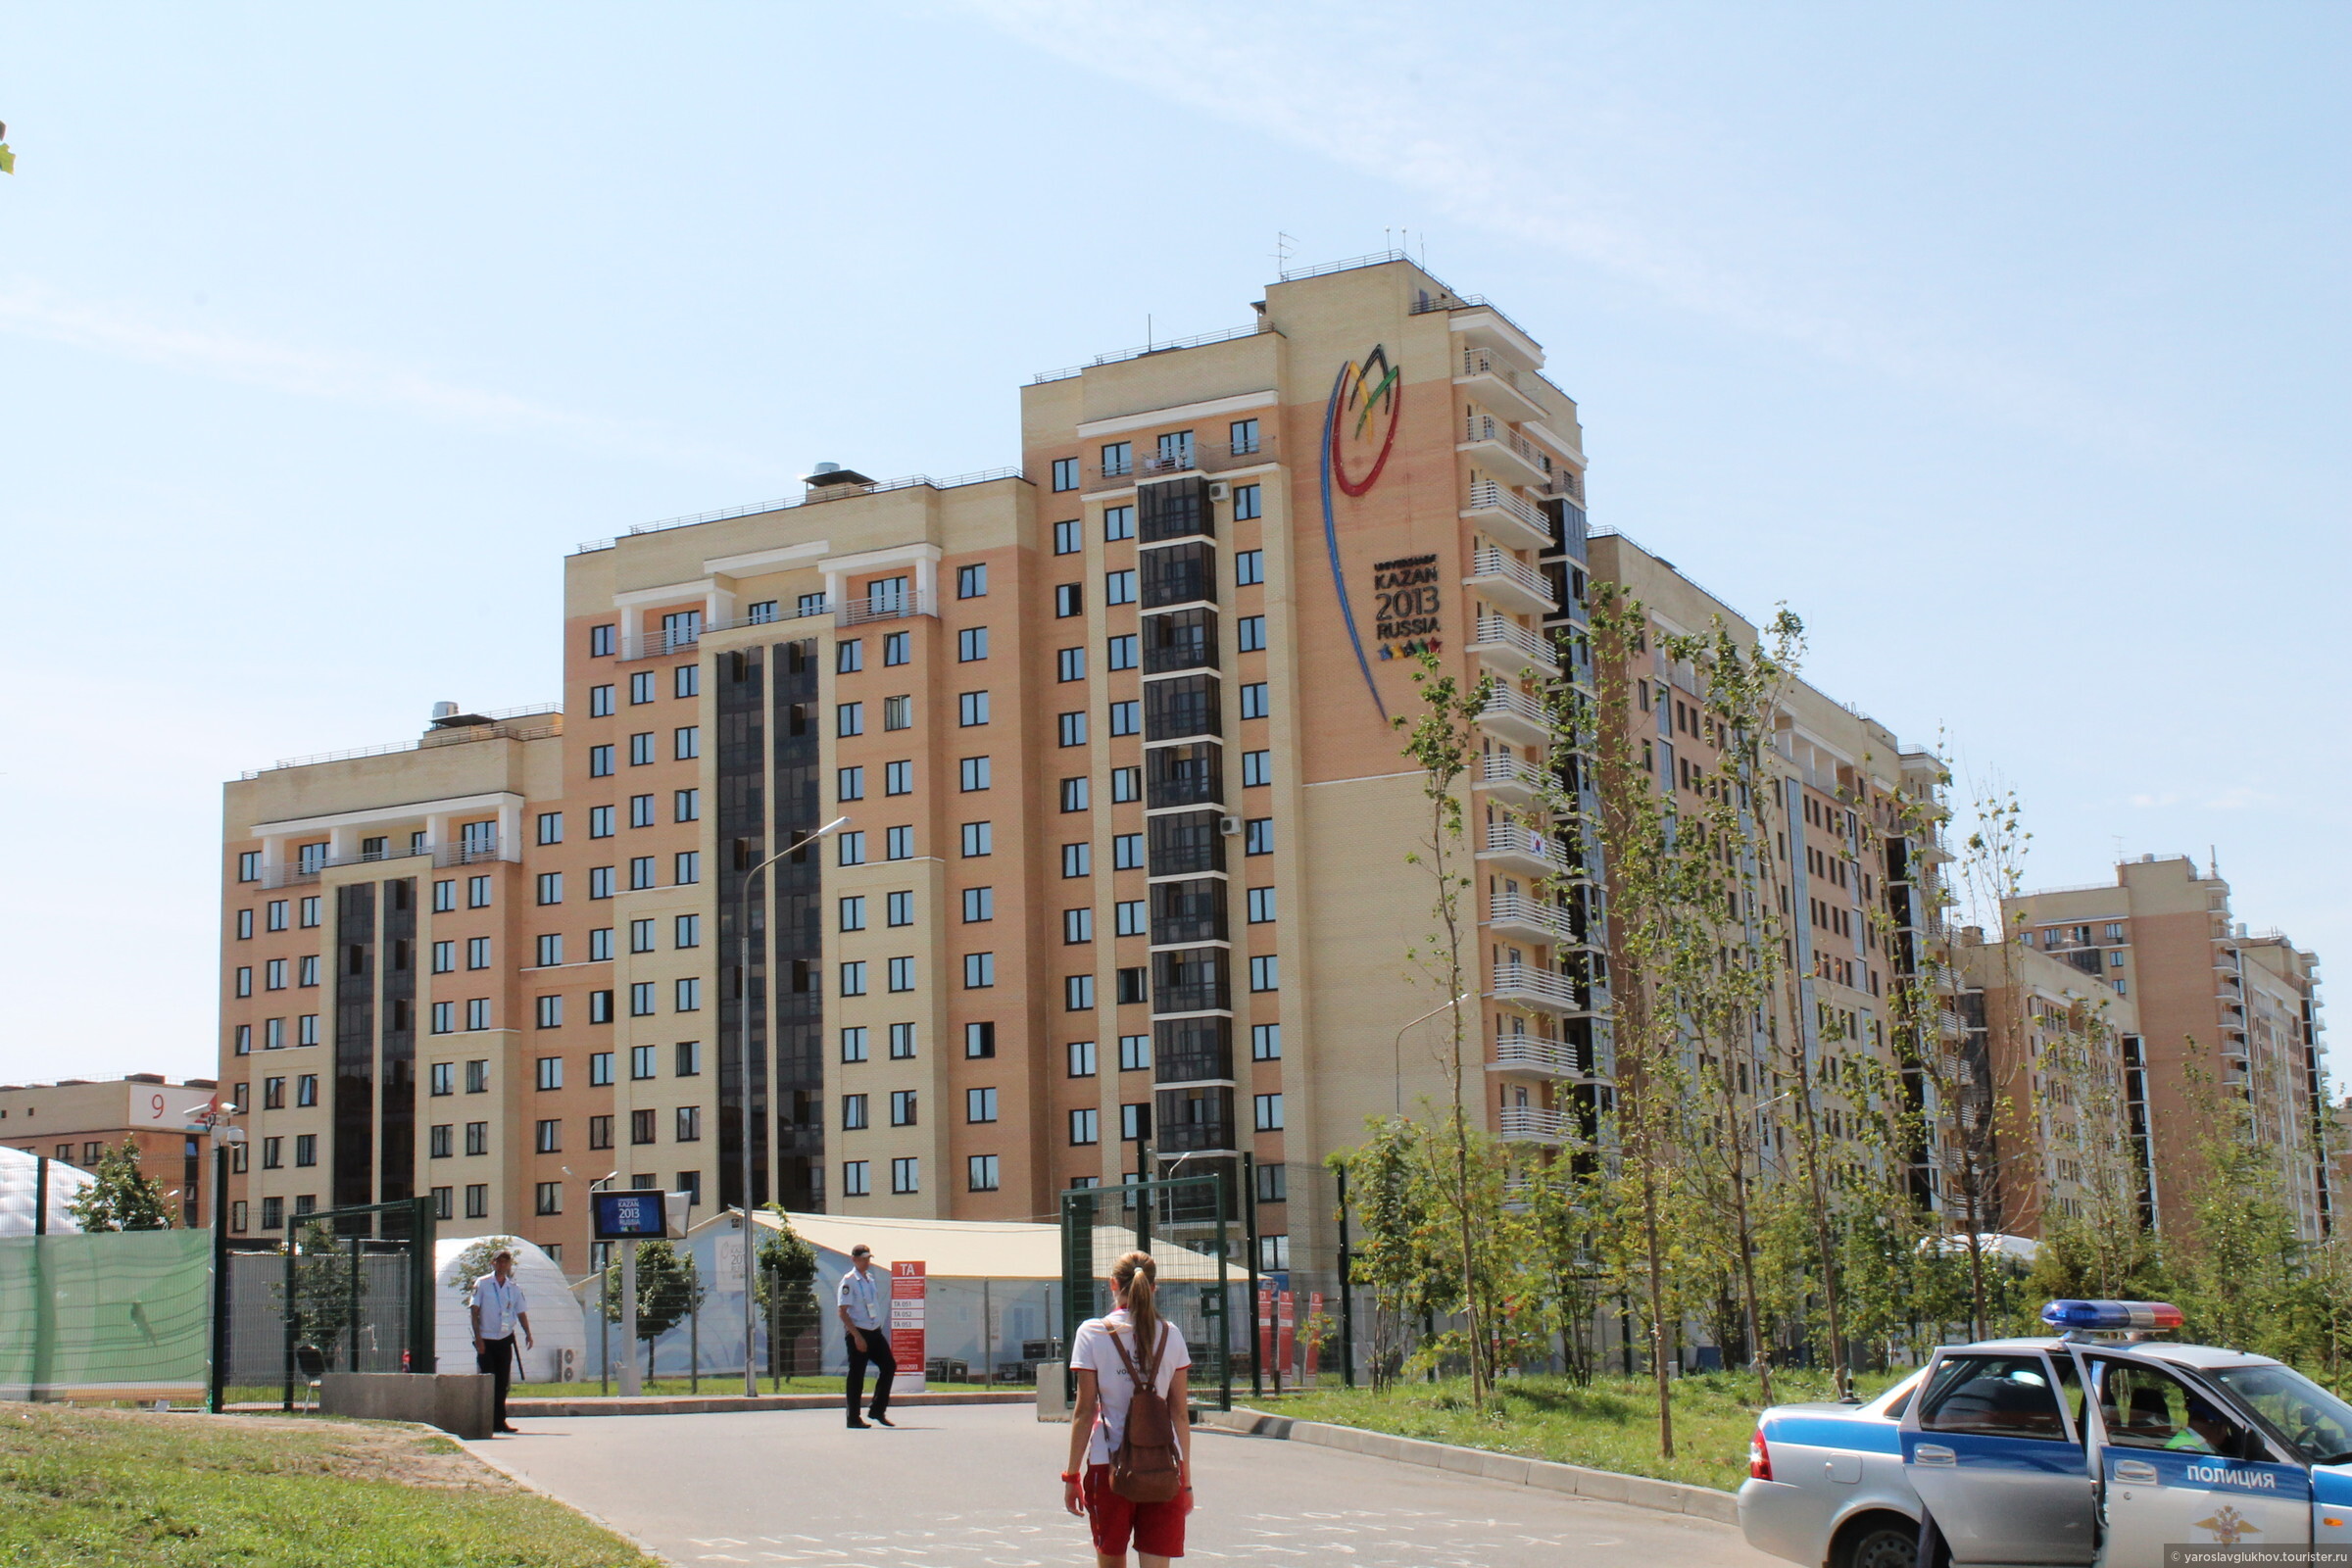 Казань олимпийская деревня гостиница